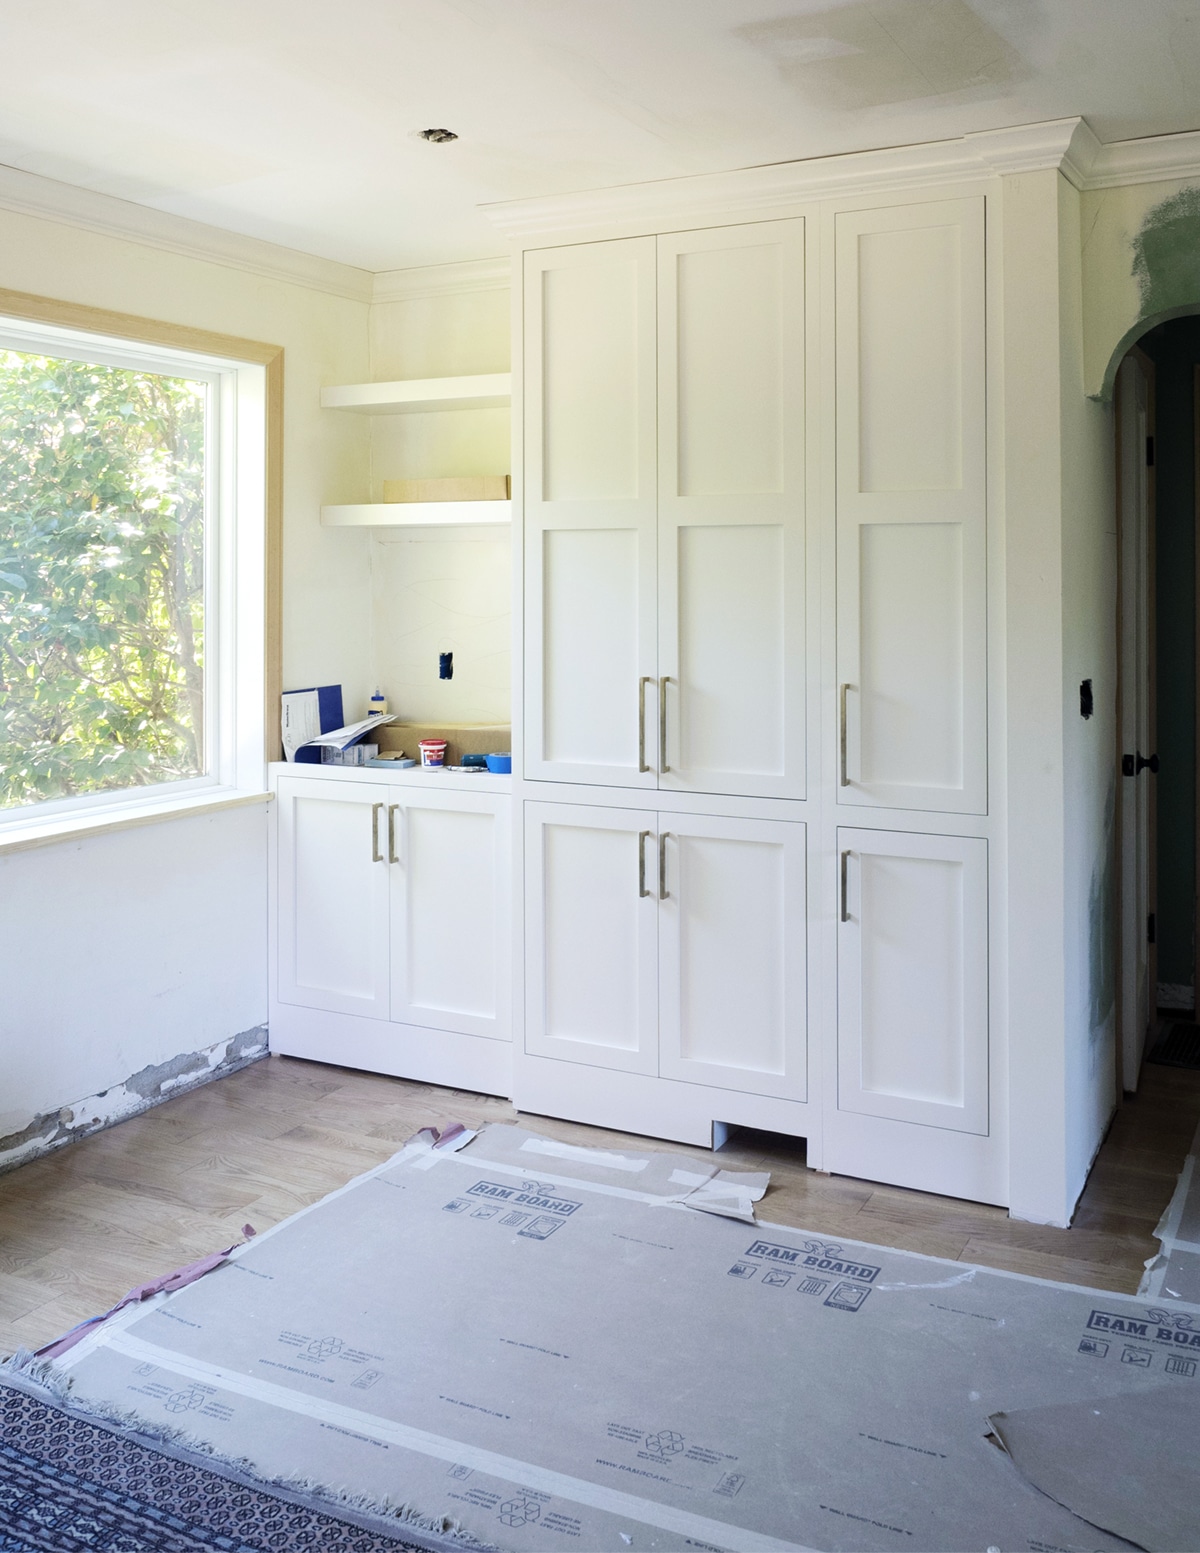 coco kelley kitchen update - our breakfast nook cabinets